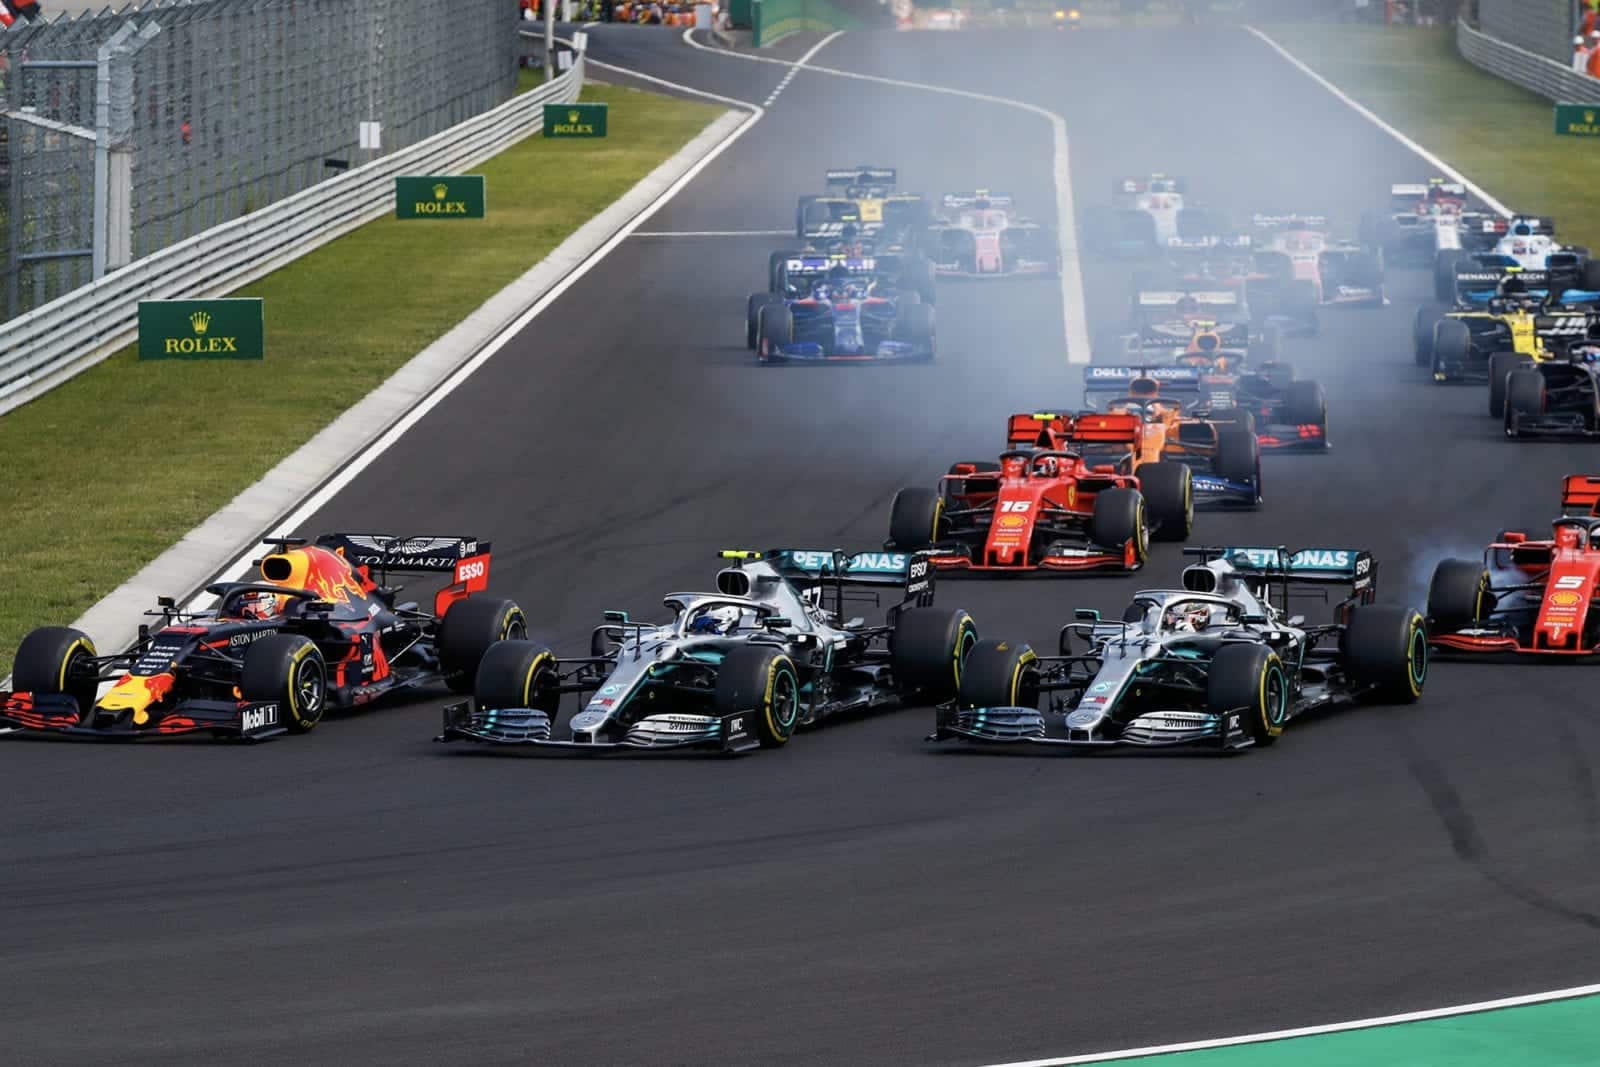 2019 Hungarian Grand Prix start